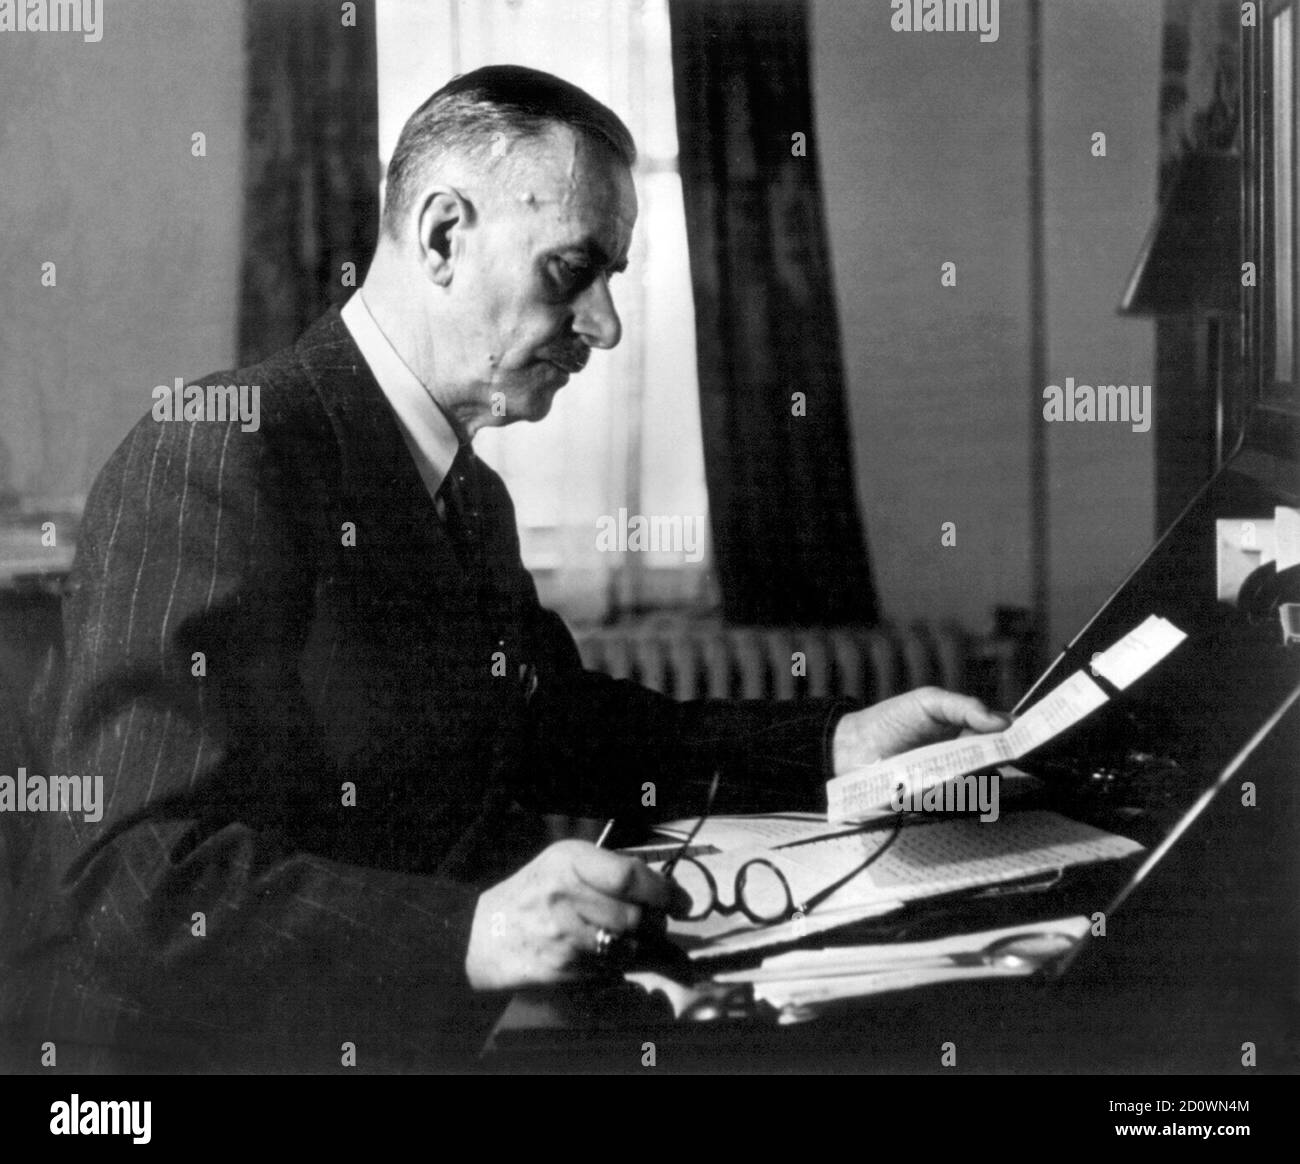 Thomas Mann. Ritratto dello scrittore tedesco Paul Thomas Mann (1875-1955), c.1945 Foto Stock